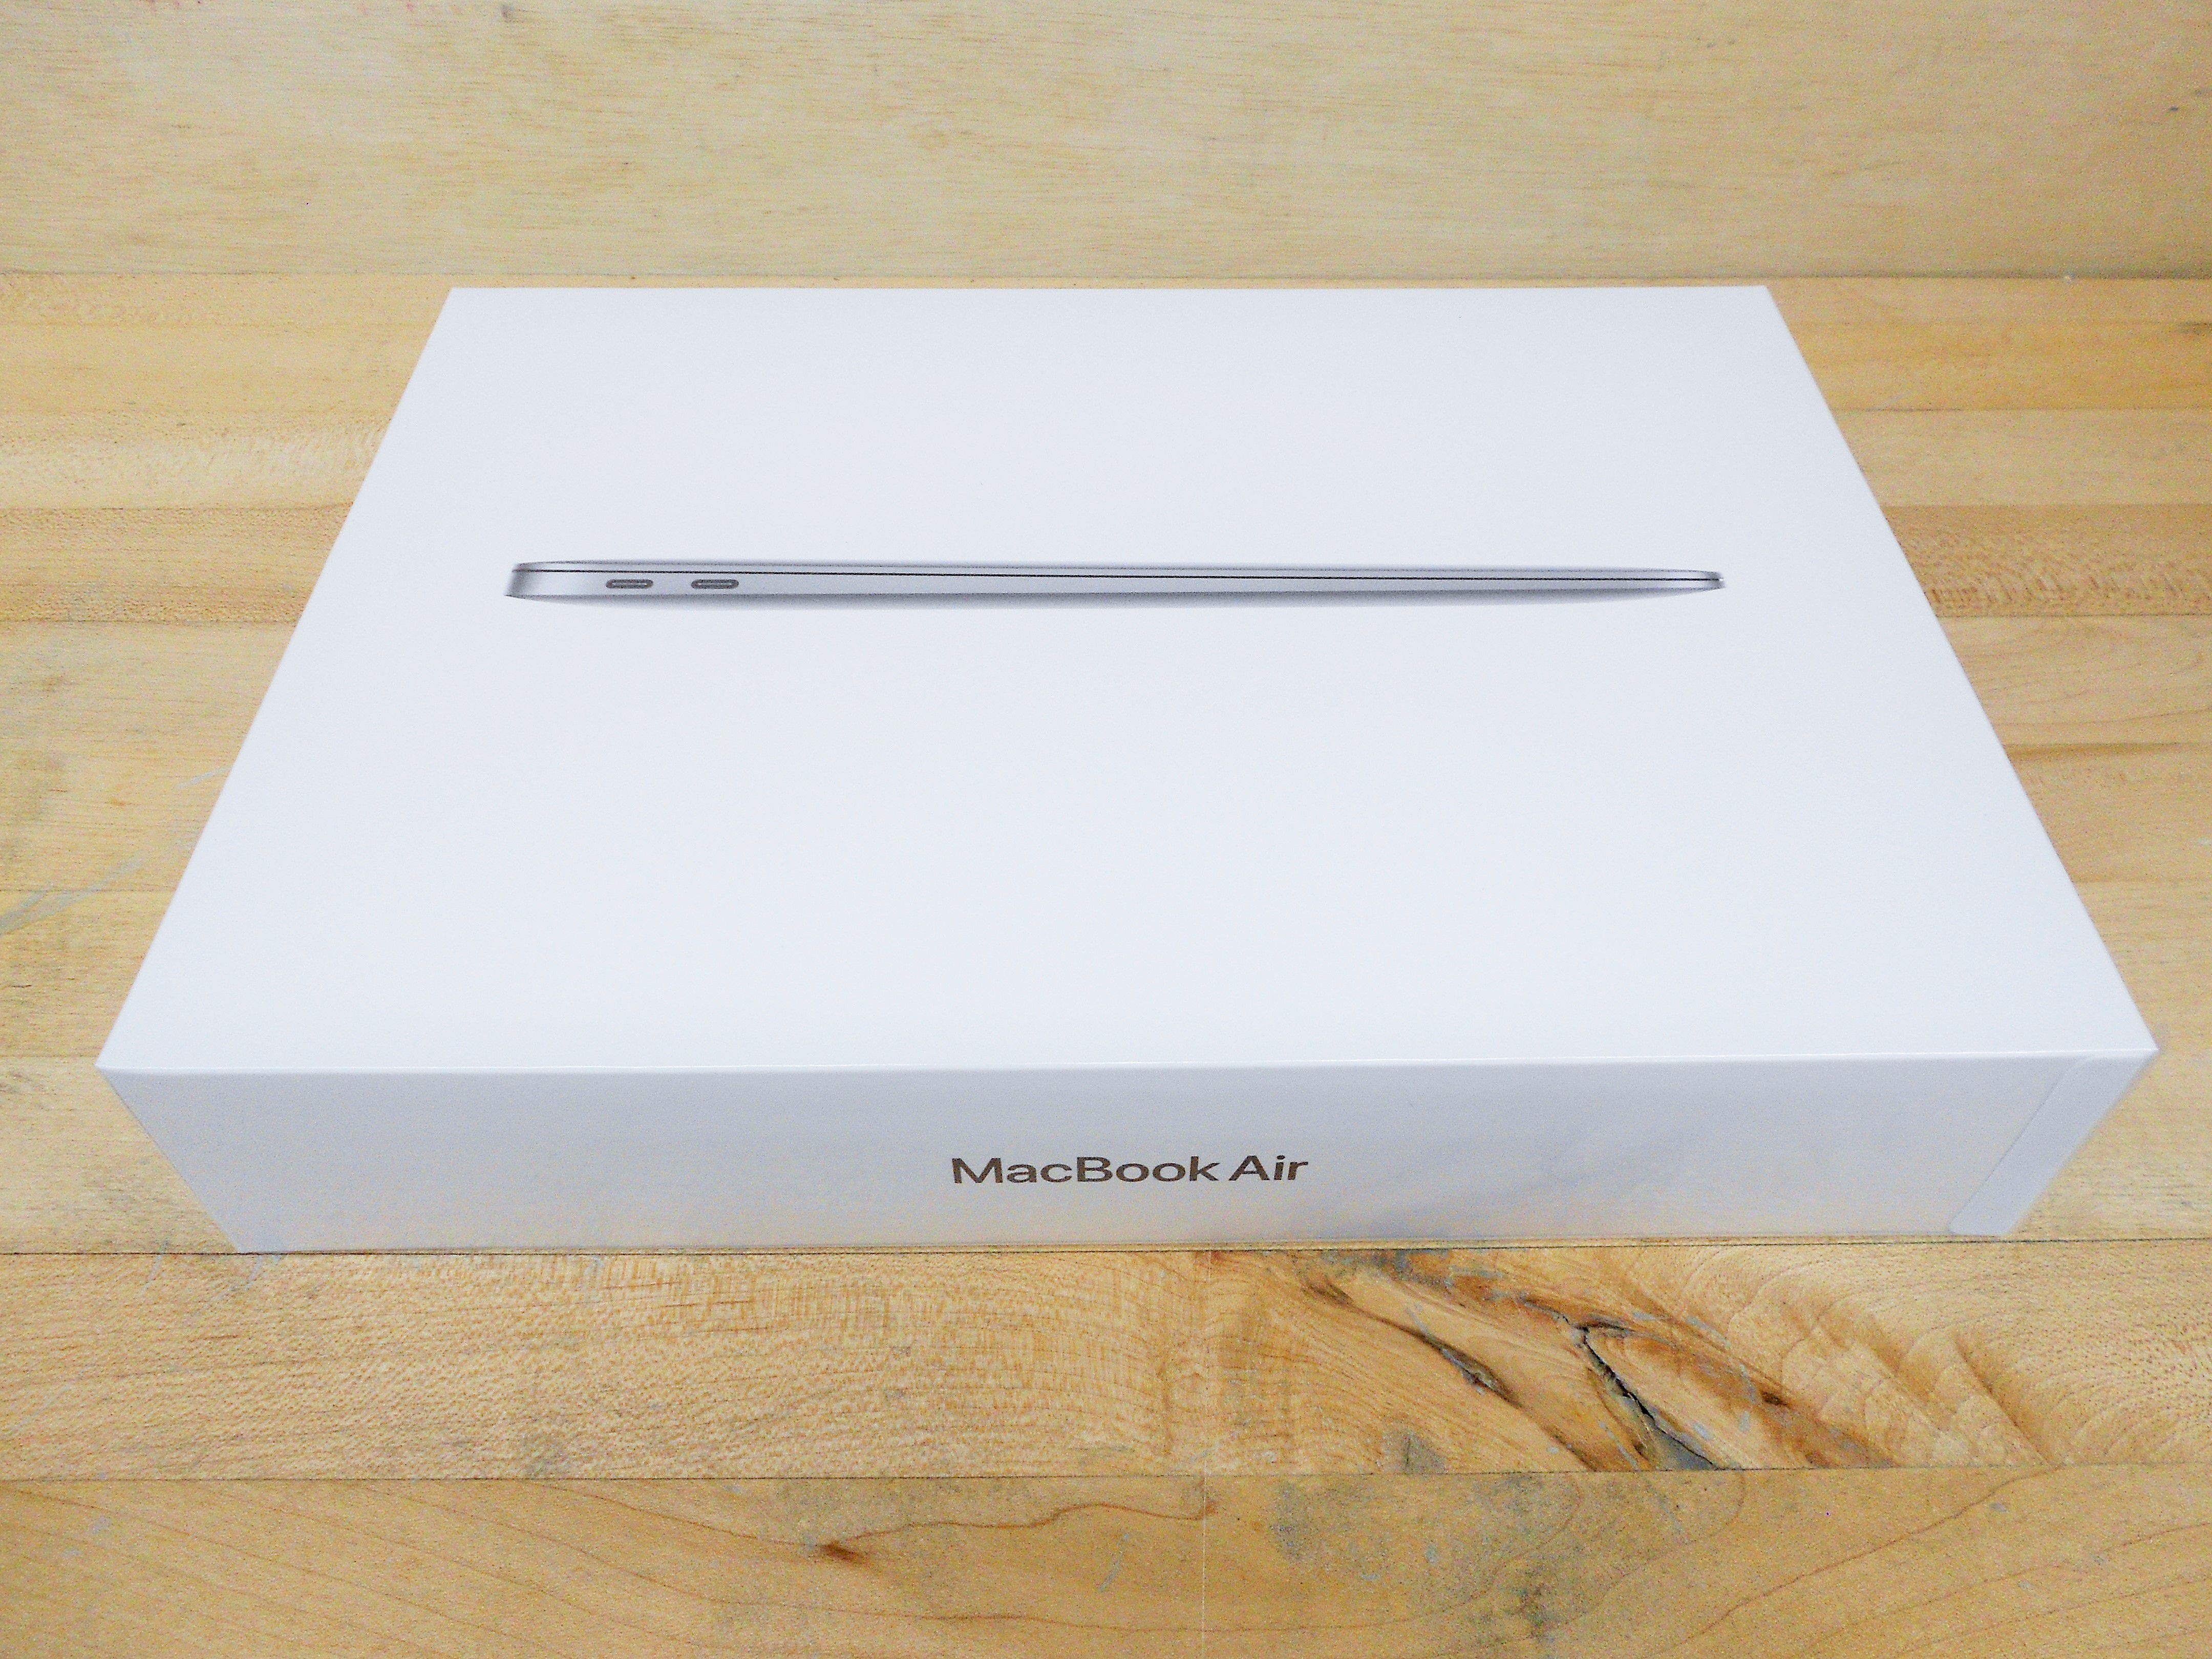 MacBook Air 2020 NEW, sealed box